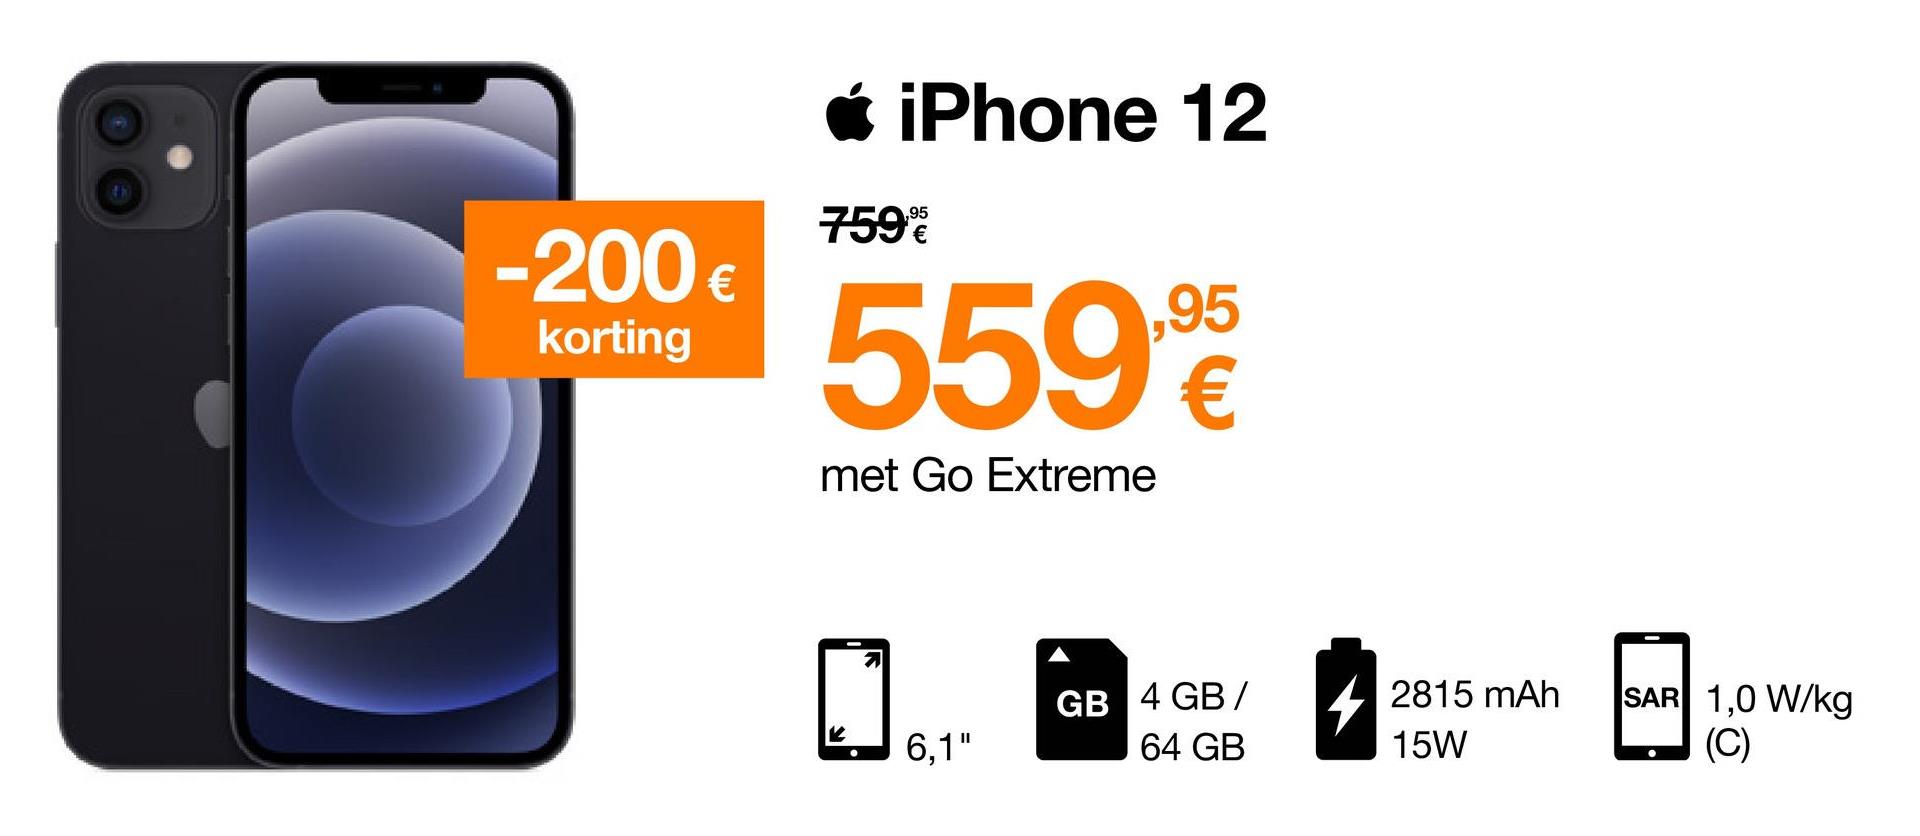 -200 €
korting
iPhone 12
759%
559,9
met Go Extreme
6,1"
GB 4 GB/
64 GB
2815 mAh
15W
SAR 1,0 W/kg
(C)